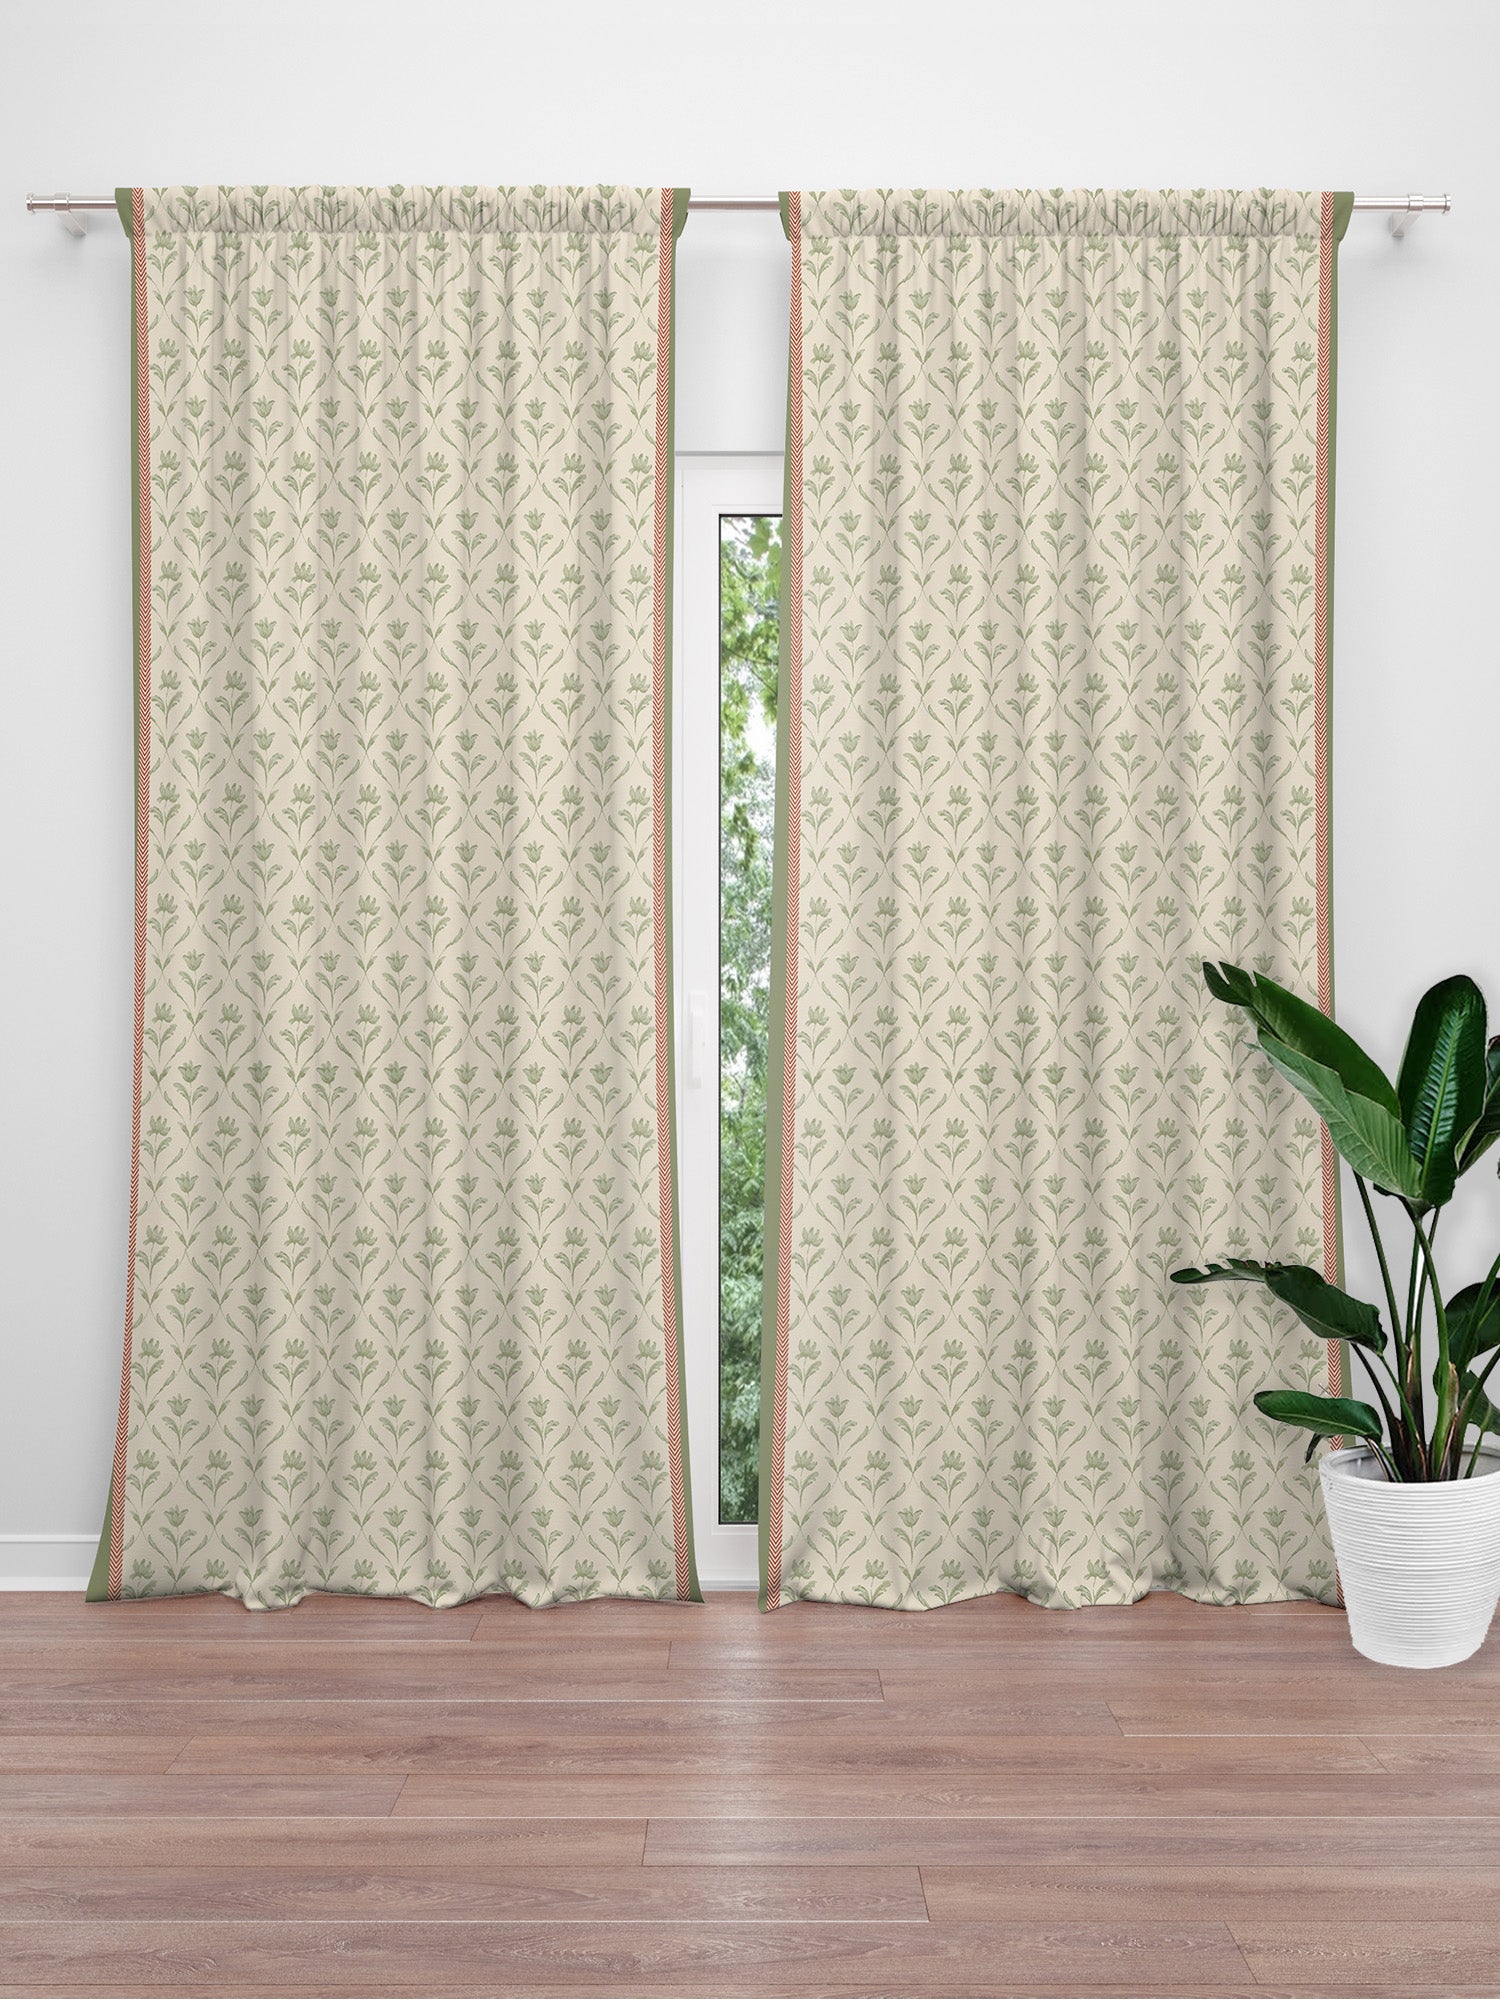 Door Curtain Cotton Blend Floral Digital Printed in White Green Color - 50" x 84" (Pack of 2)(Hidden Loop)